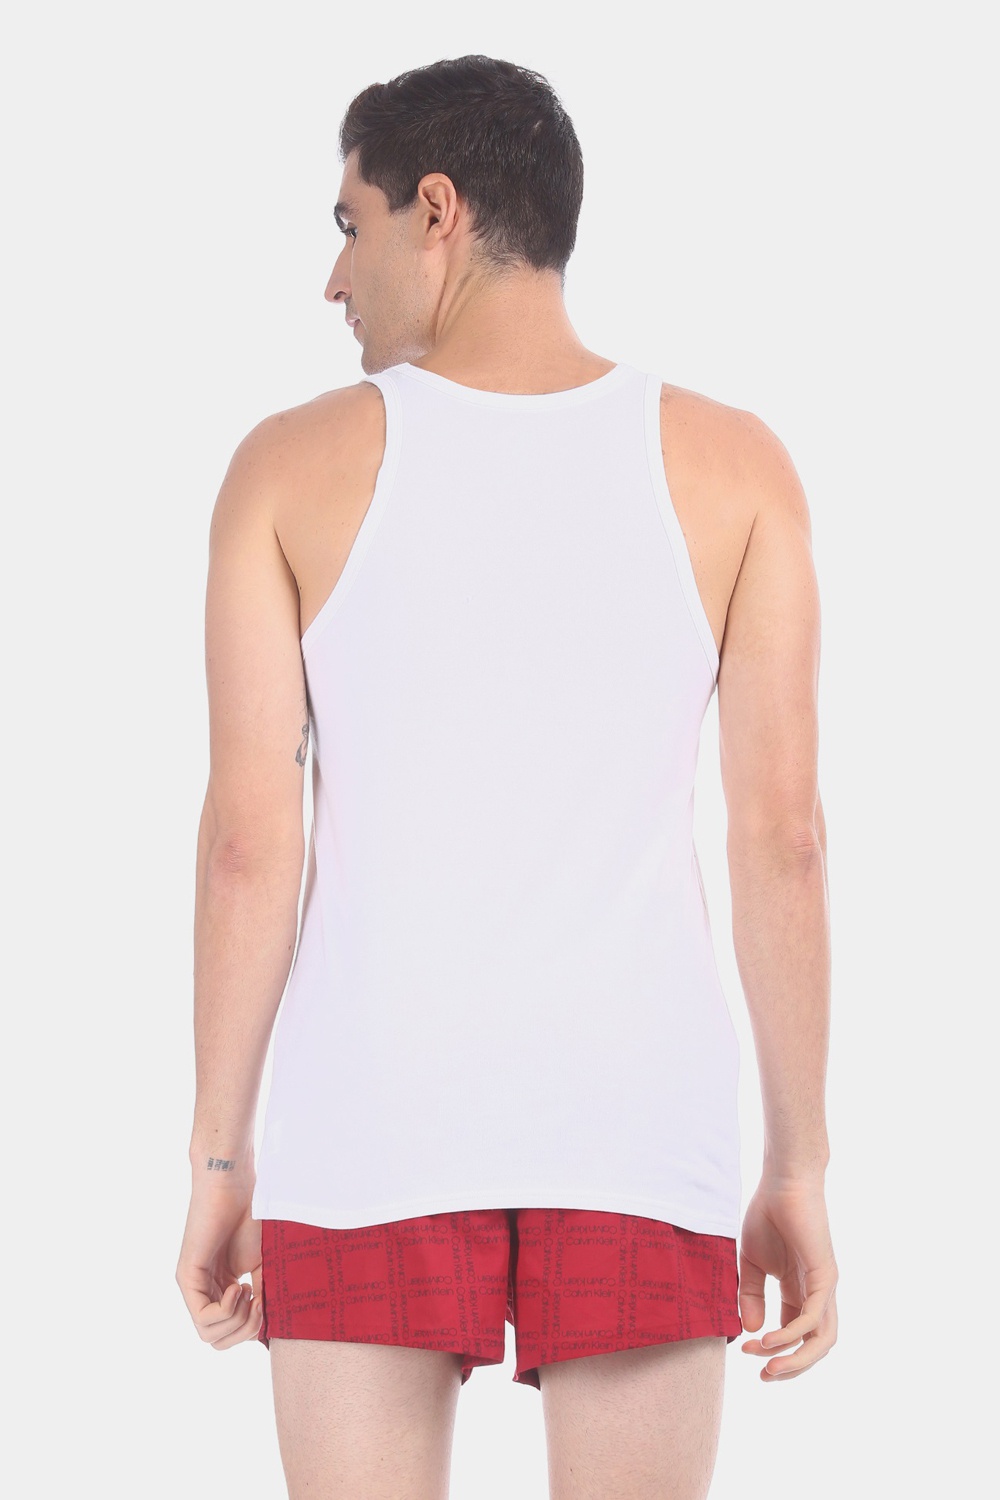 Calvin Klein White Men's Undershirt- 2 Pack 